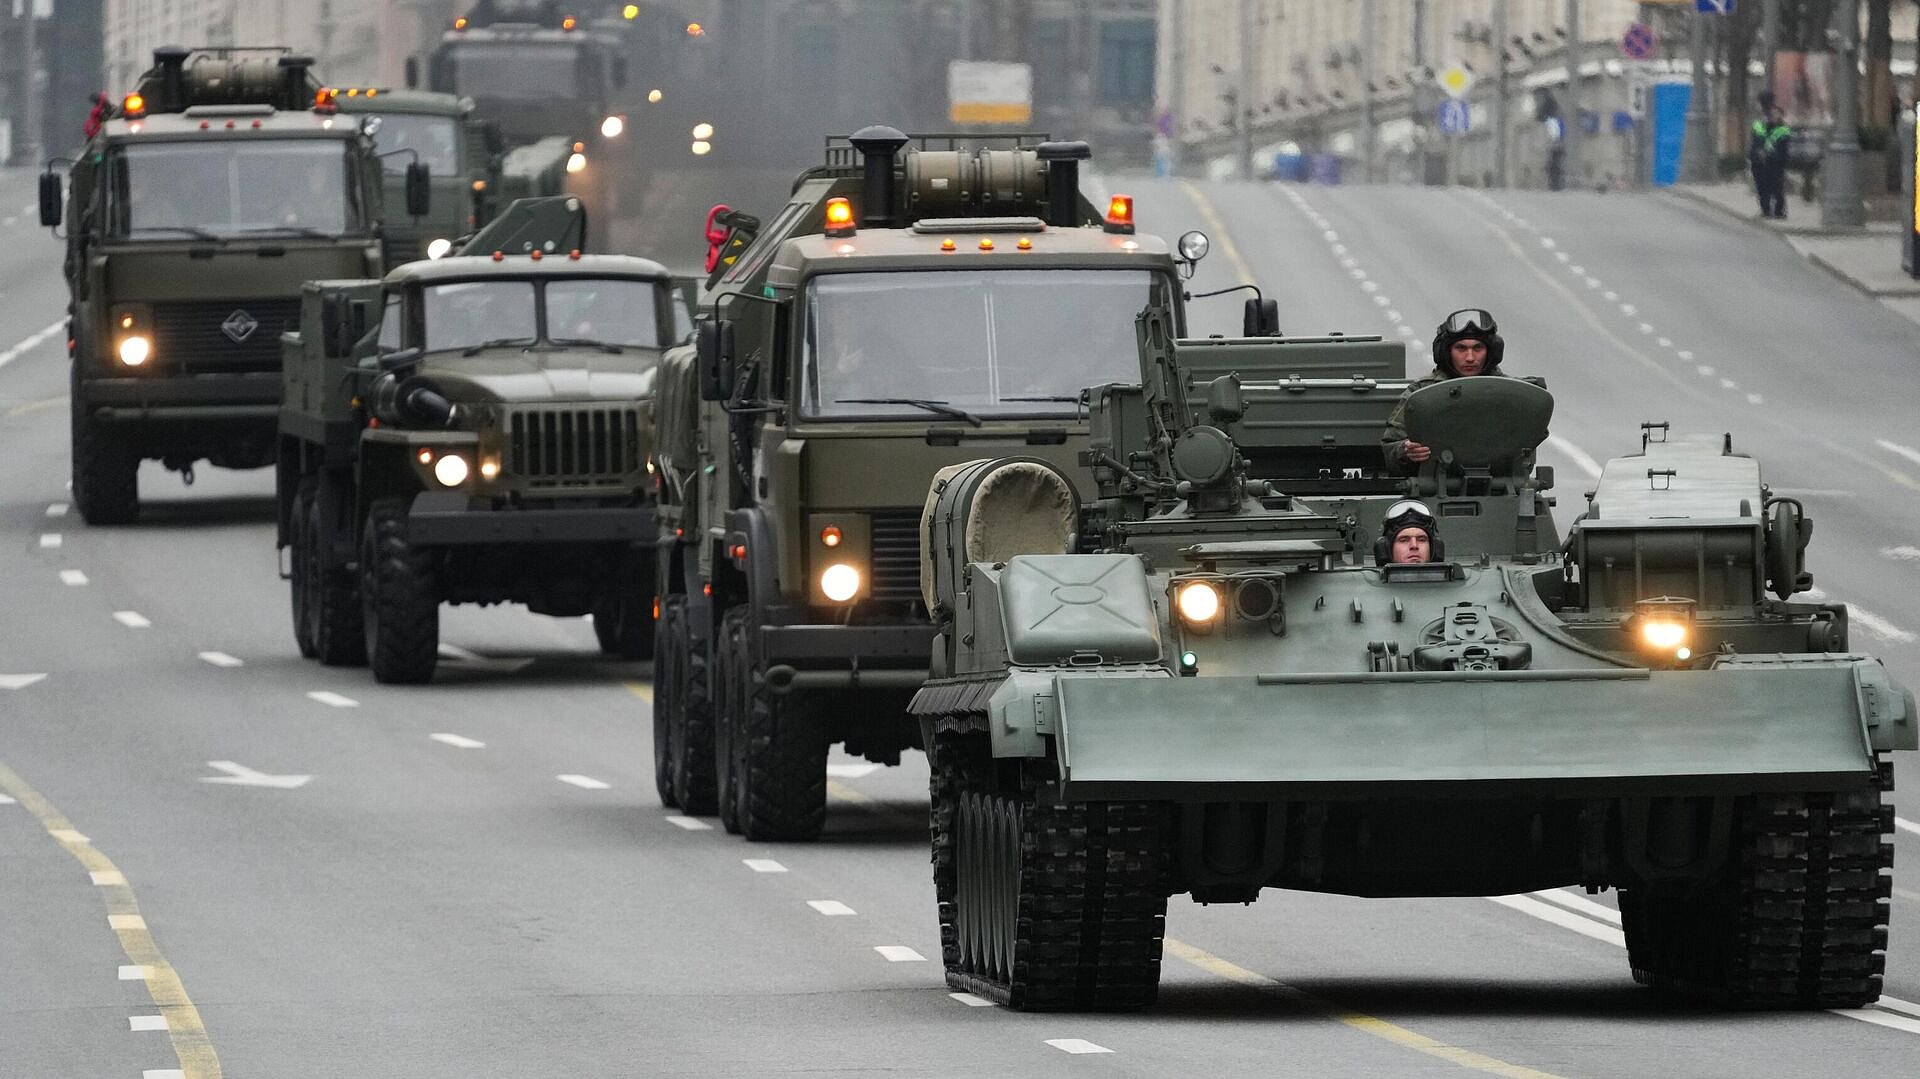 В Москве прошла репетиция парада Победы